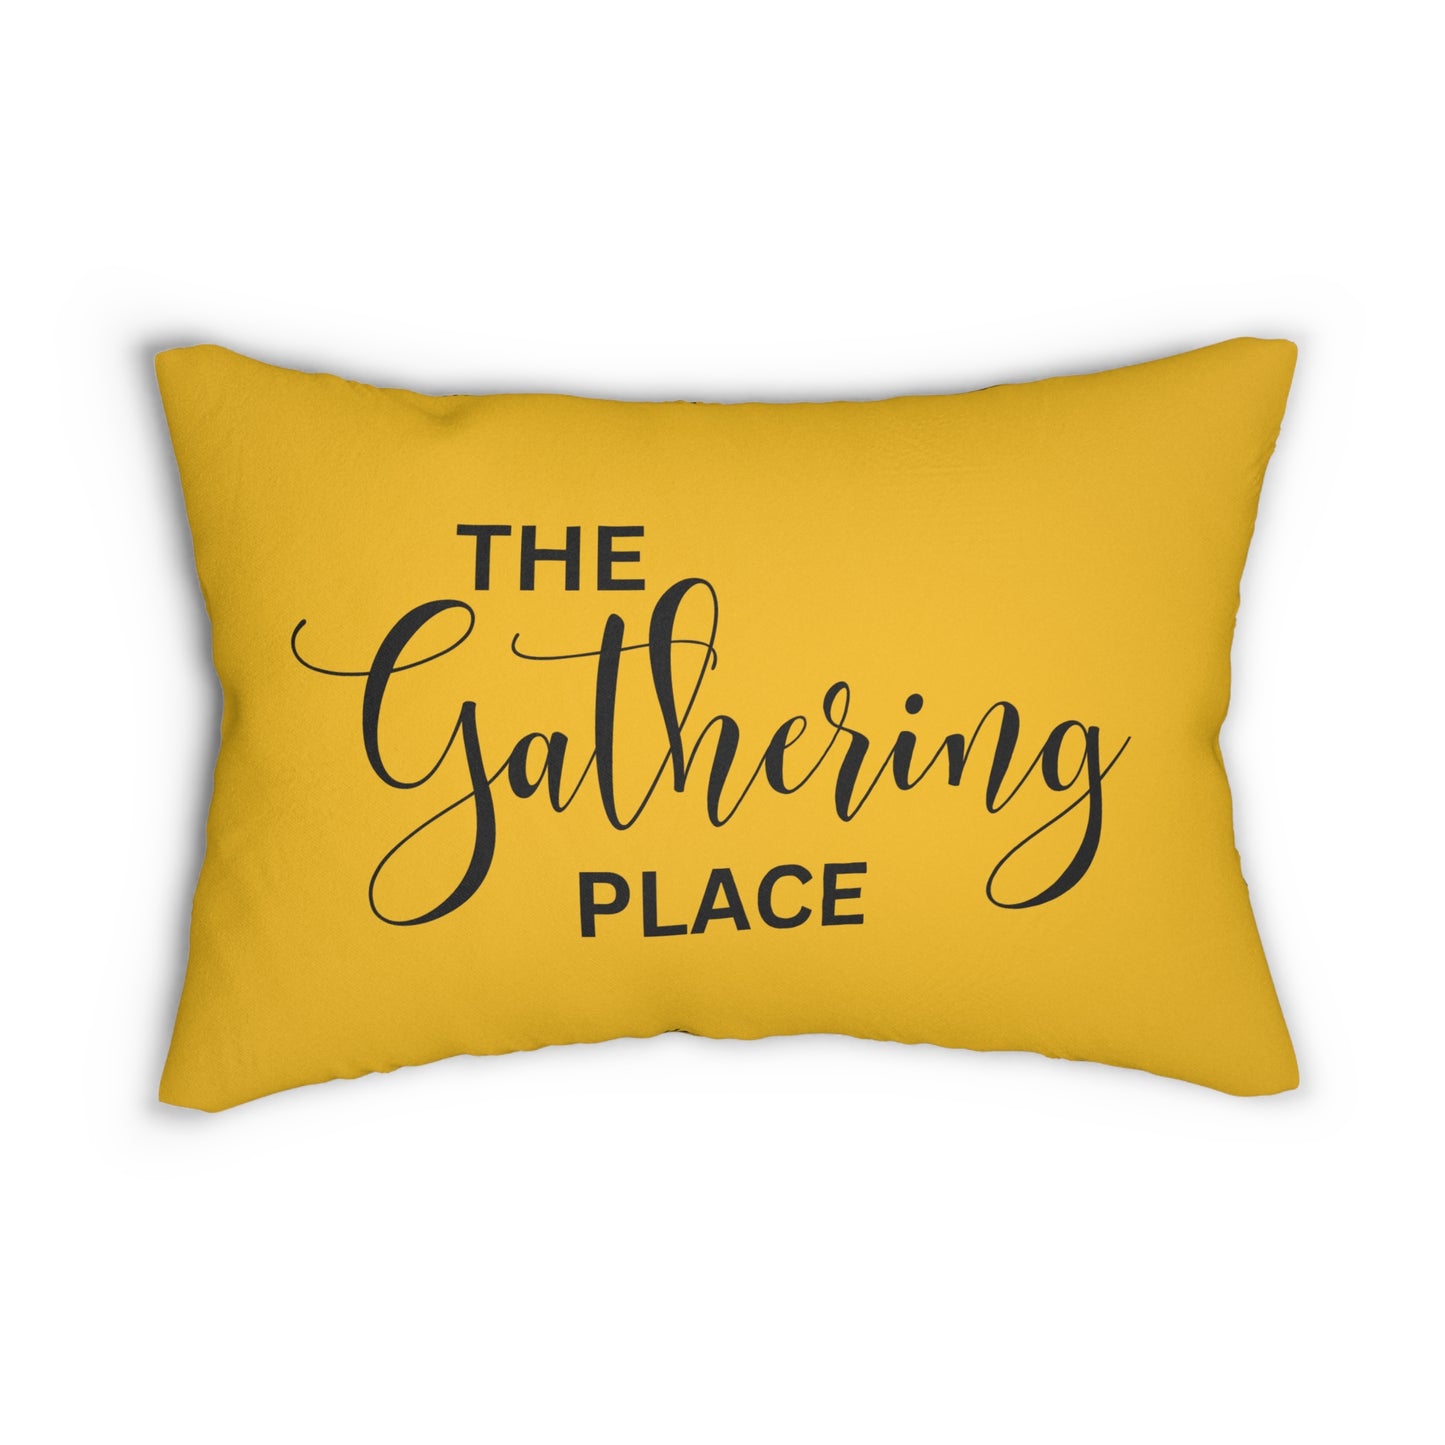 Almohada decorativa geométrica "The Gathering Place"